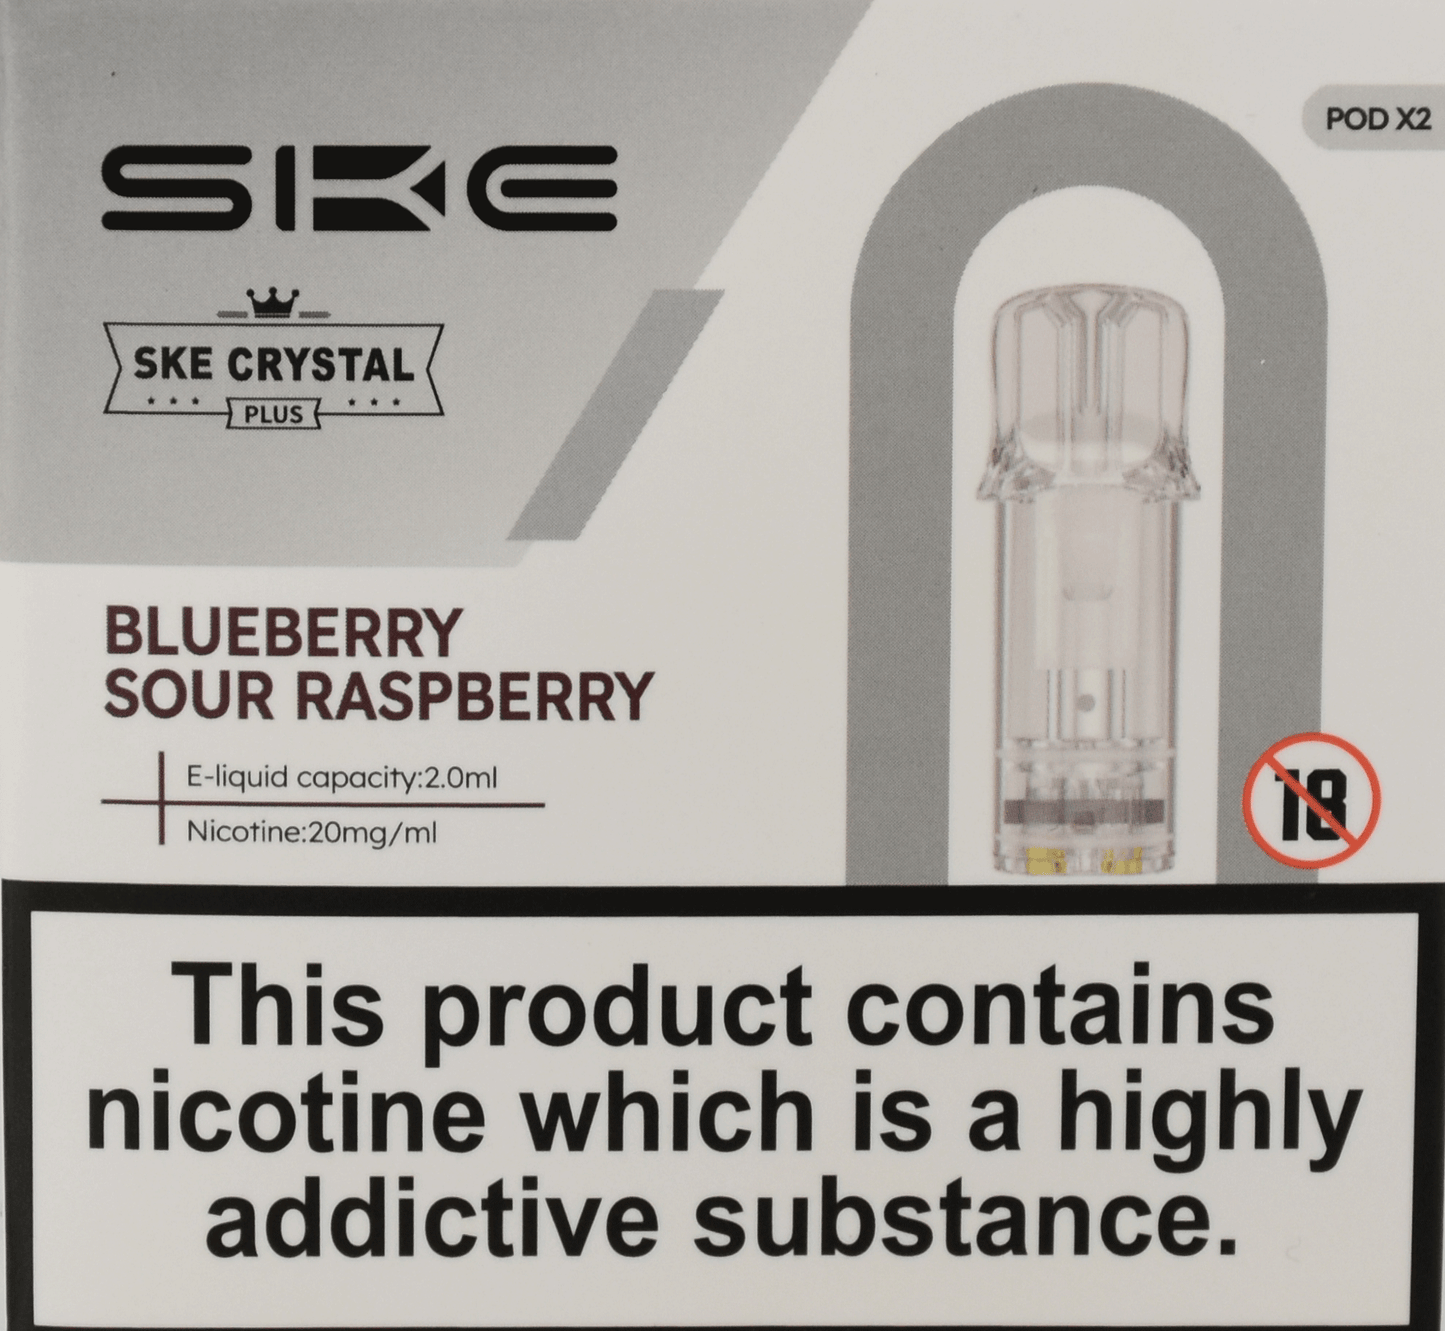 Blueberry Sour Raspberry - SKE Crystal Plus - 2ml Prefilled Pods (2x Pods) - SKE - Crystal Plus Pod - Rolling Refills